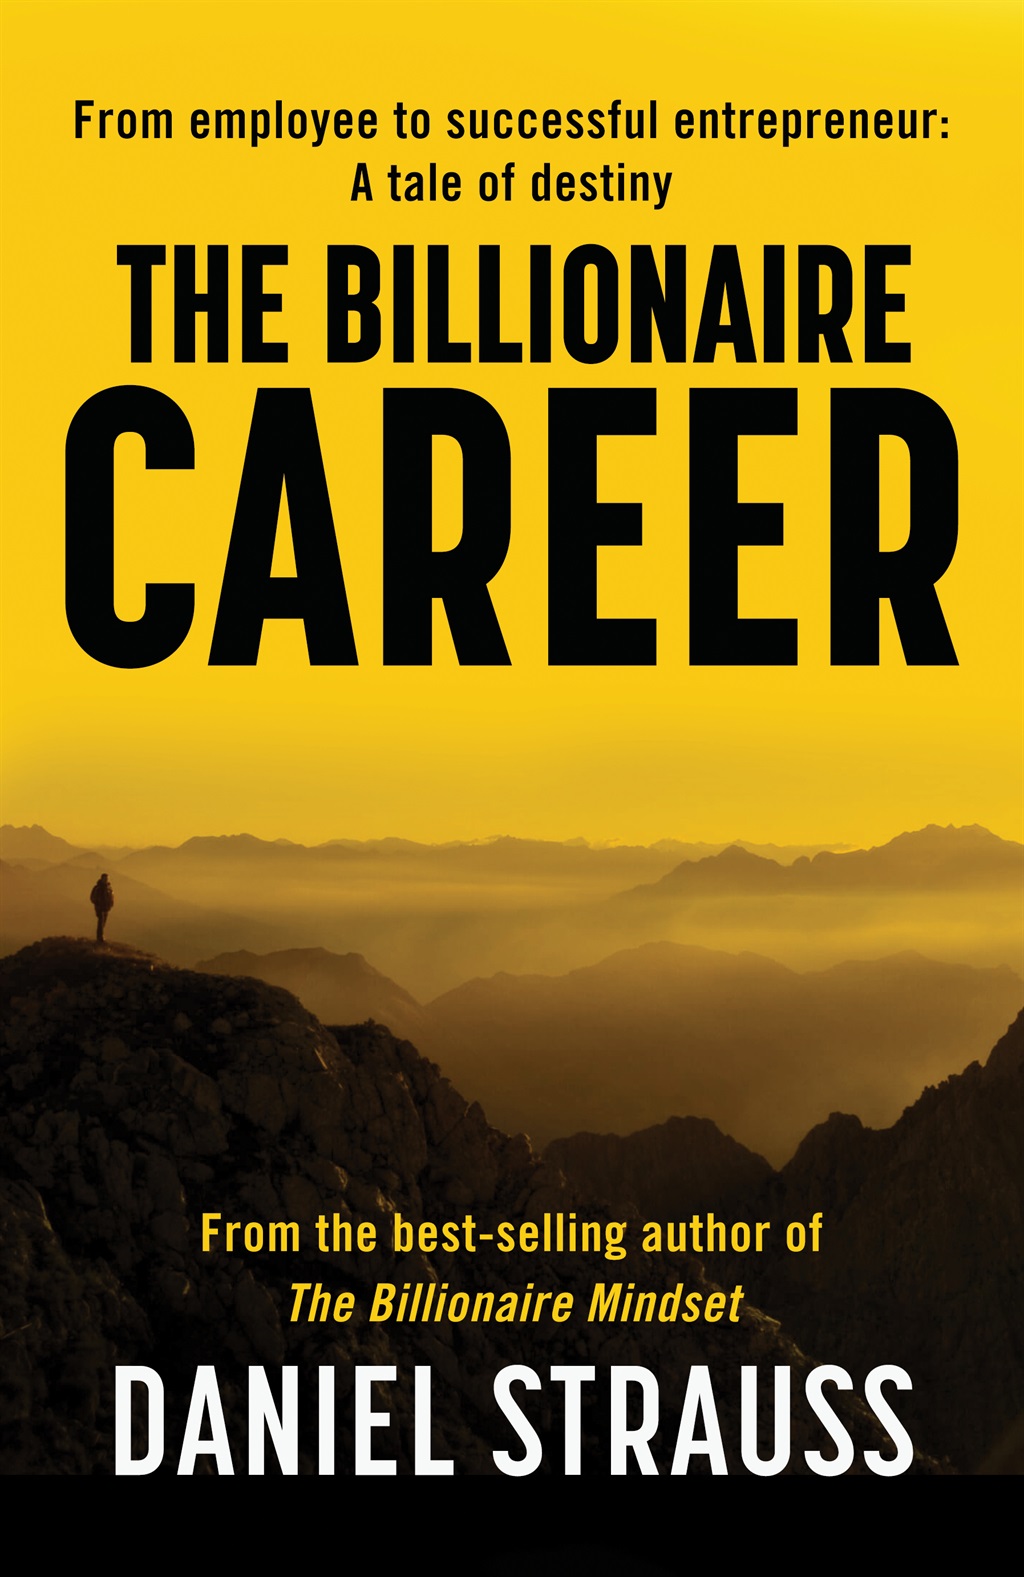 The Billionaire Career by Daniel Strauss. (Tafelberg)